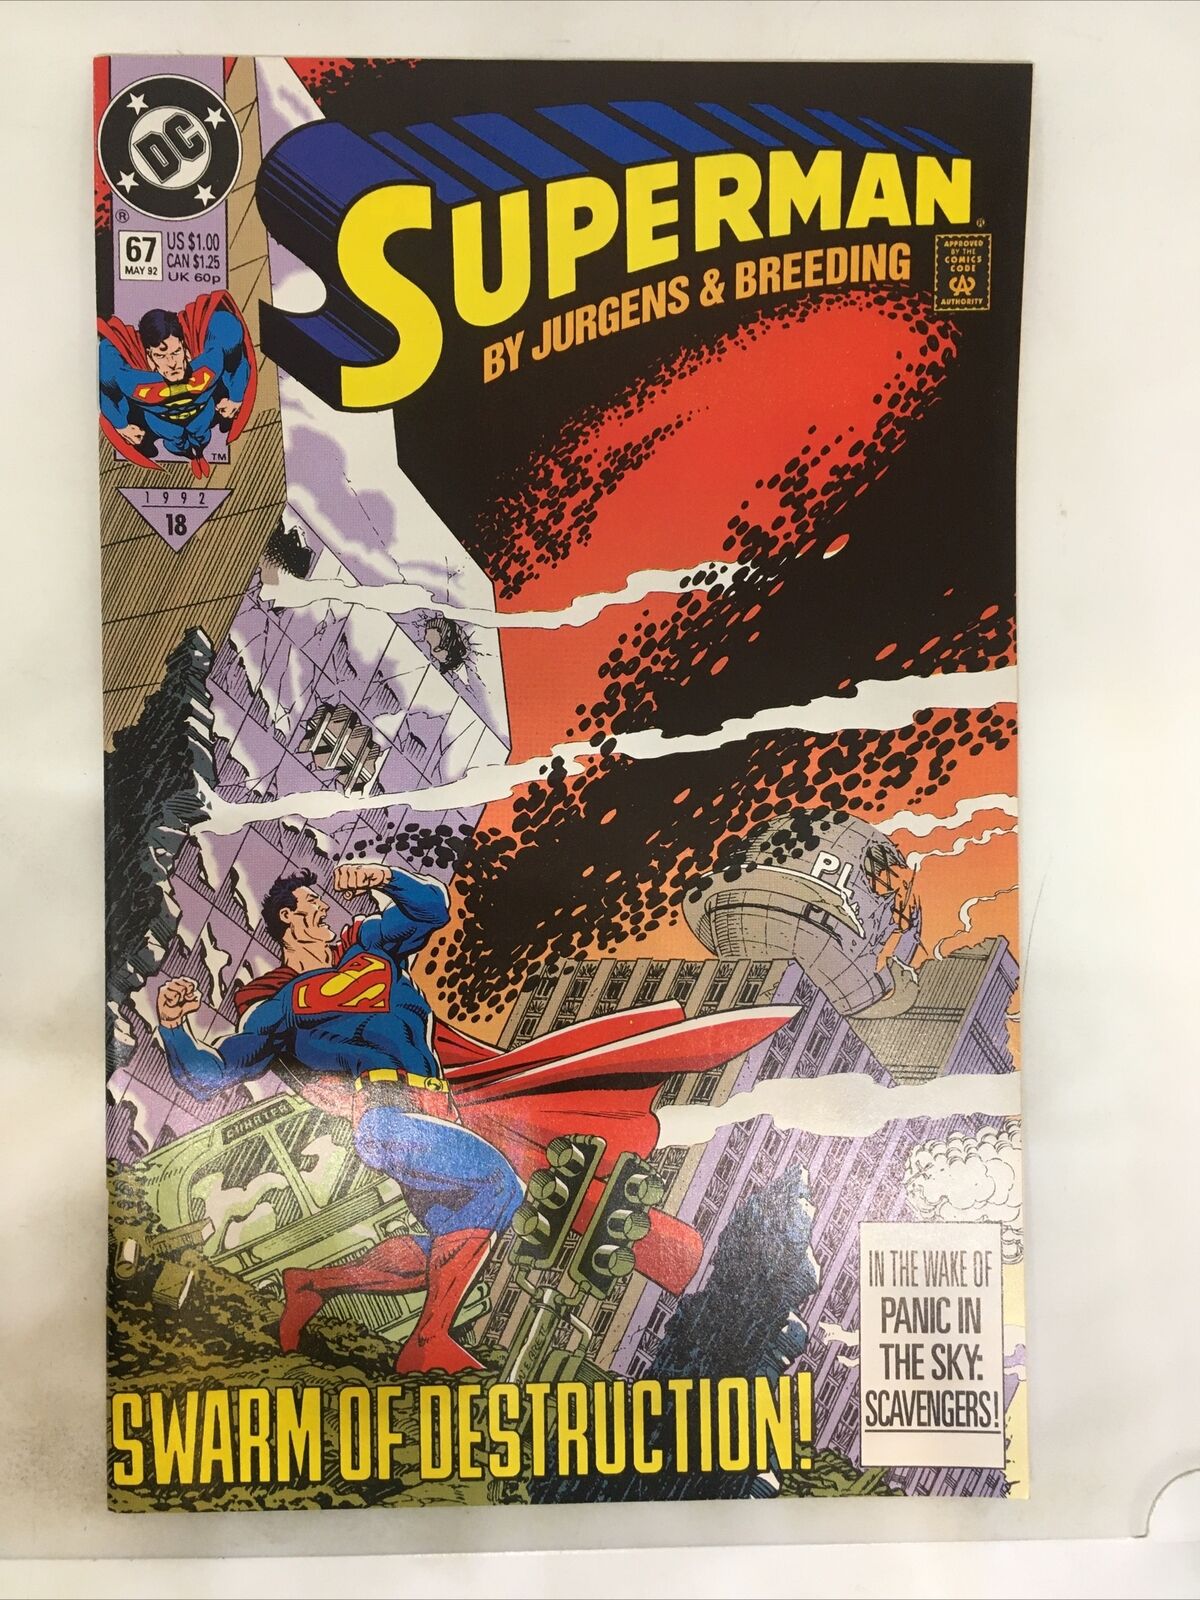 SUPERMAN #67 by Jurgens & Breeding \